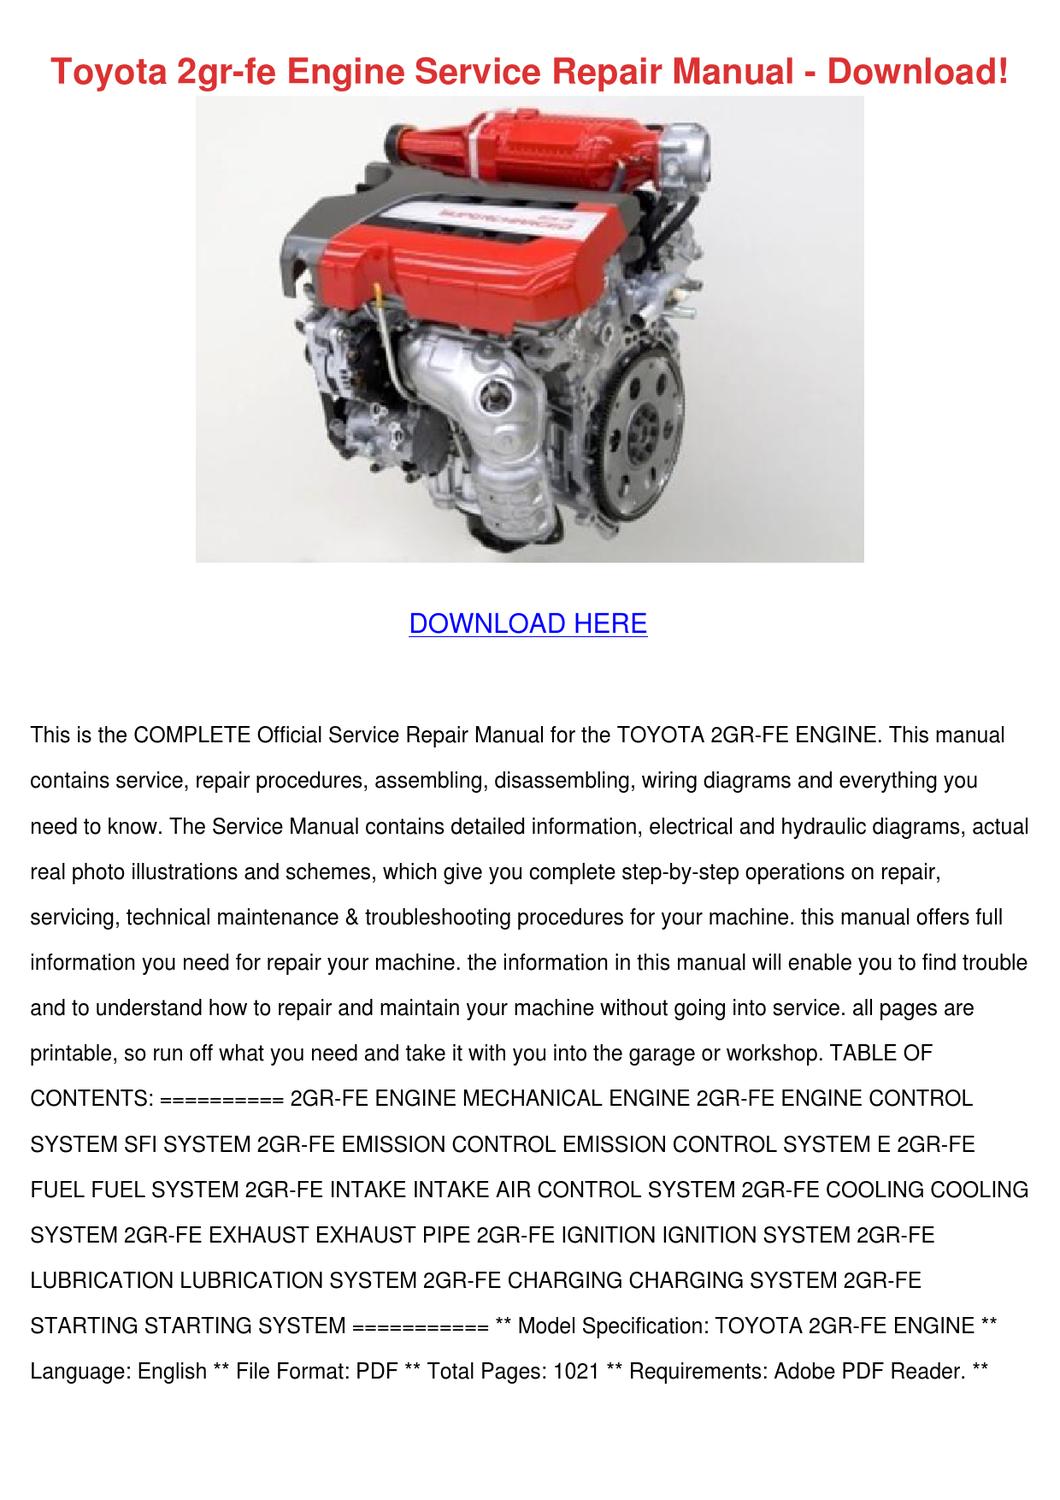 toyota 86 service manual pdf